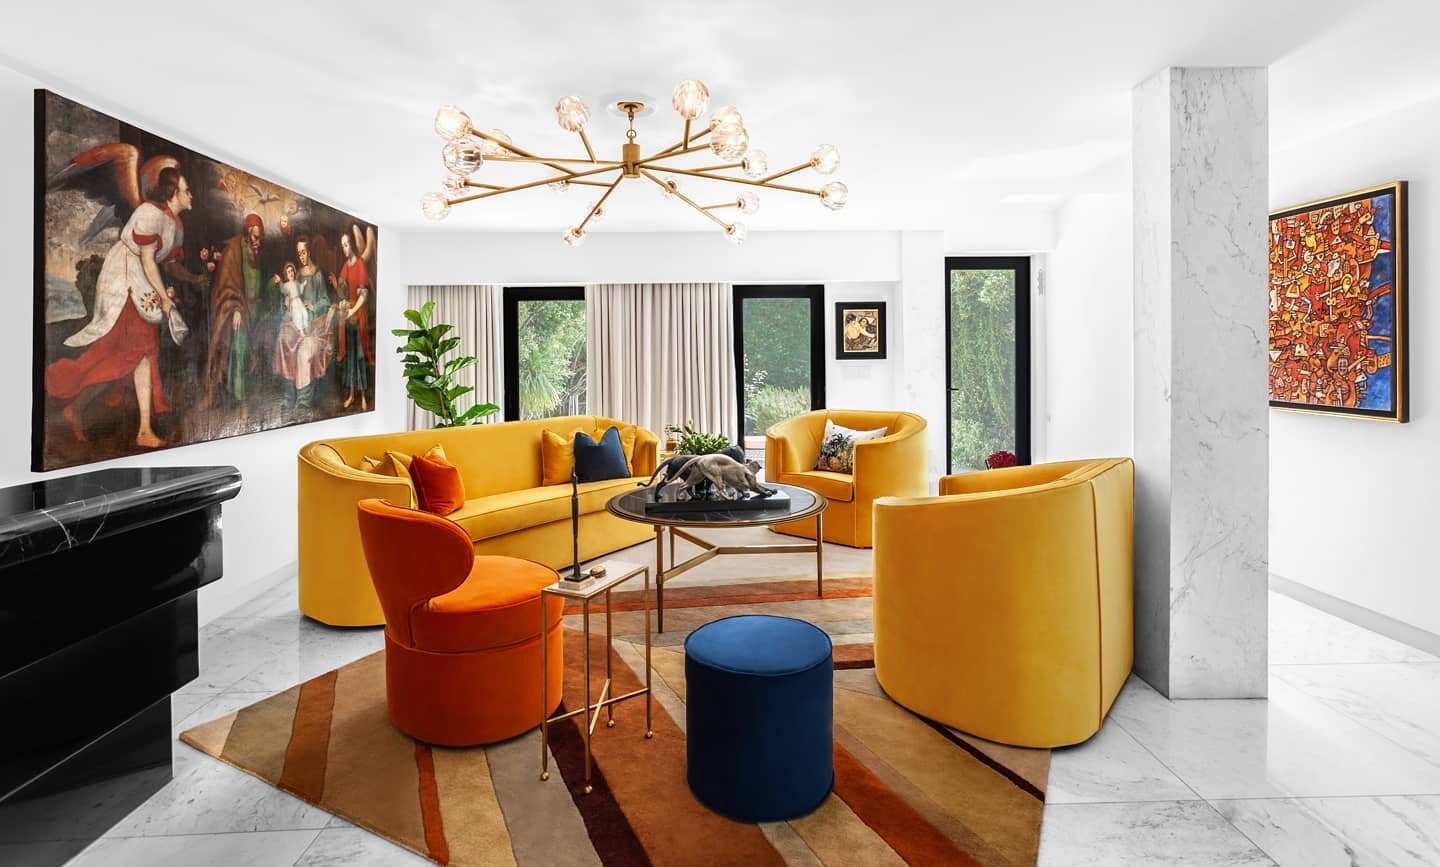 ▪️ Living Room from my project with @revelryeventdesign x @celiosdesign ▪️ Designed by Edgardo Zamora and Celio Almeida